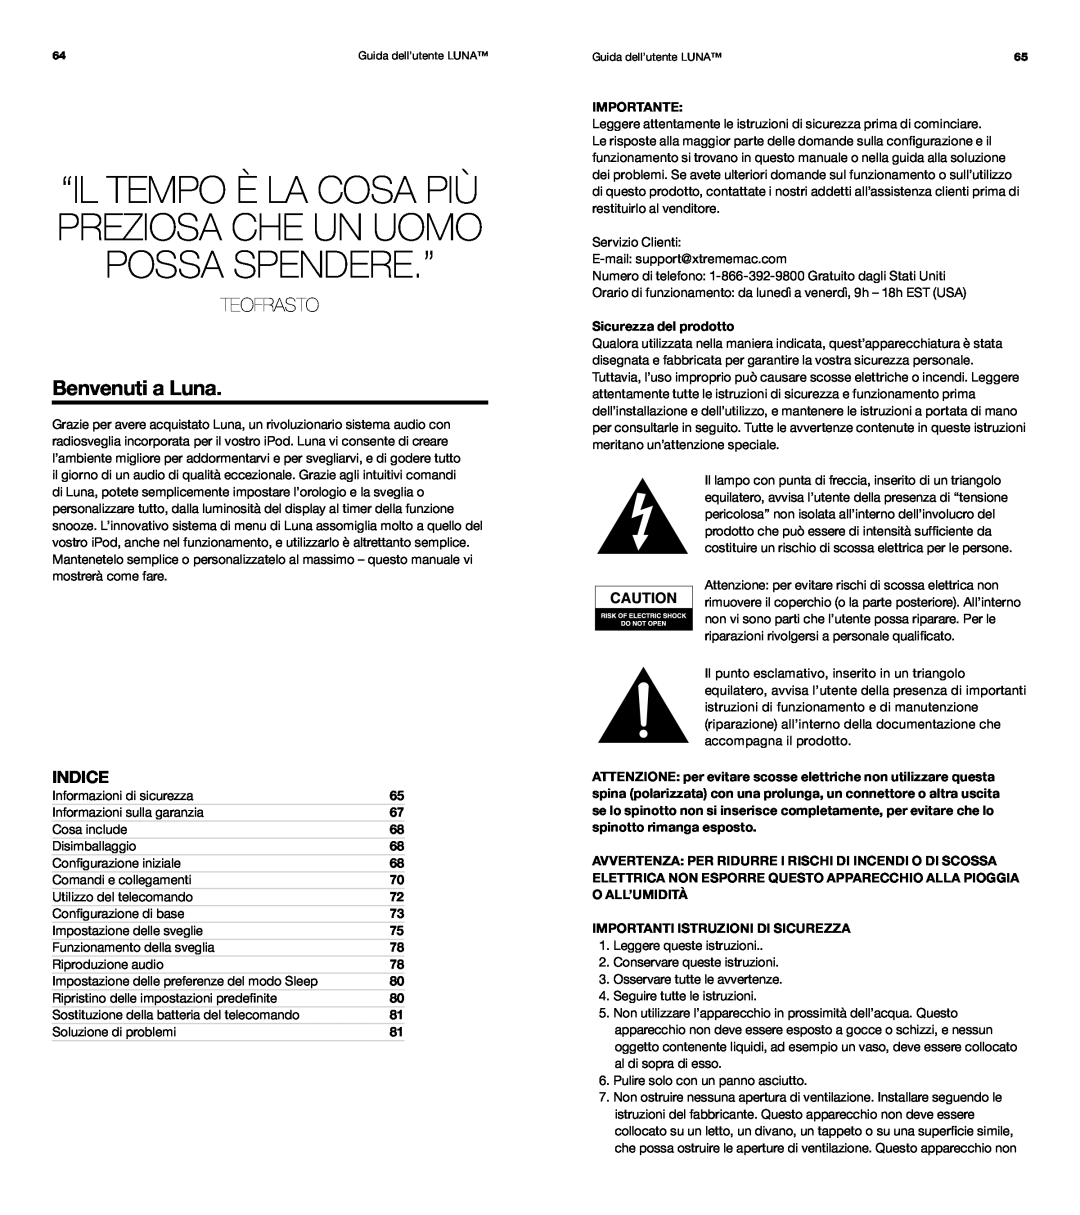 XtremeMac Room Audio System user manual Benvenuti a Luna, Teofrasto, Indice 